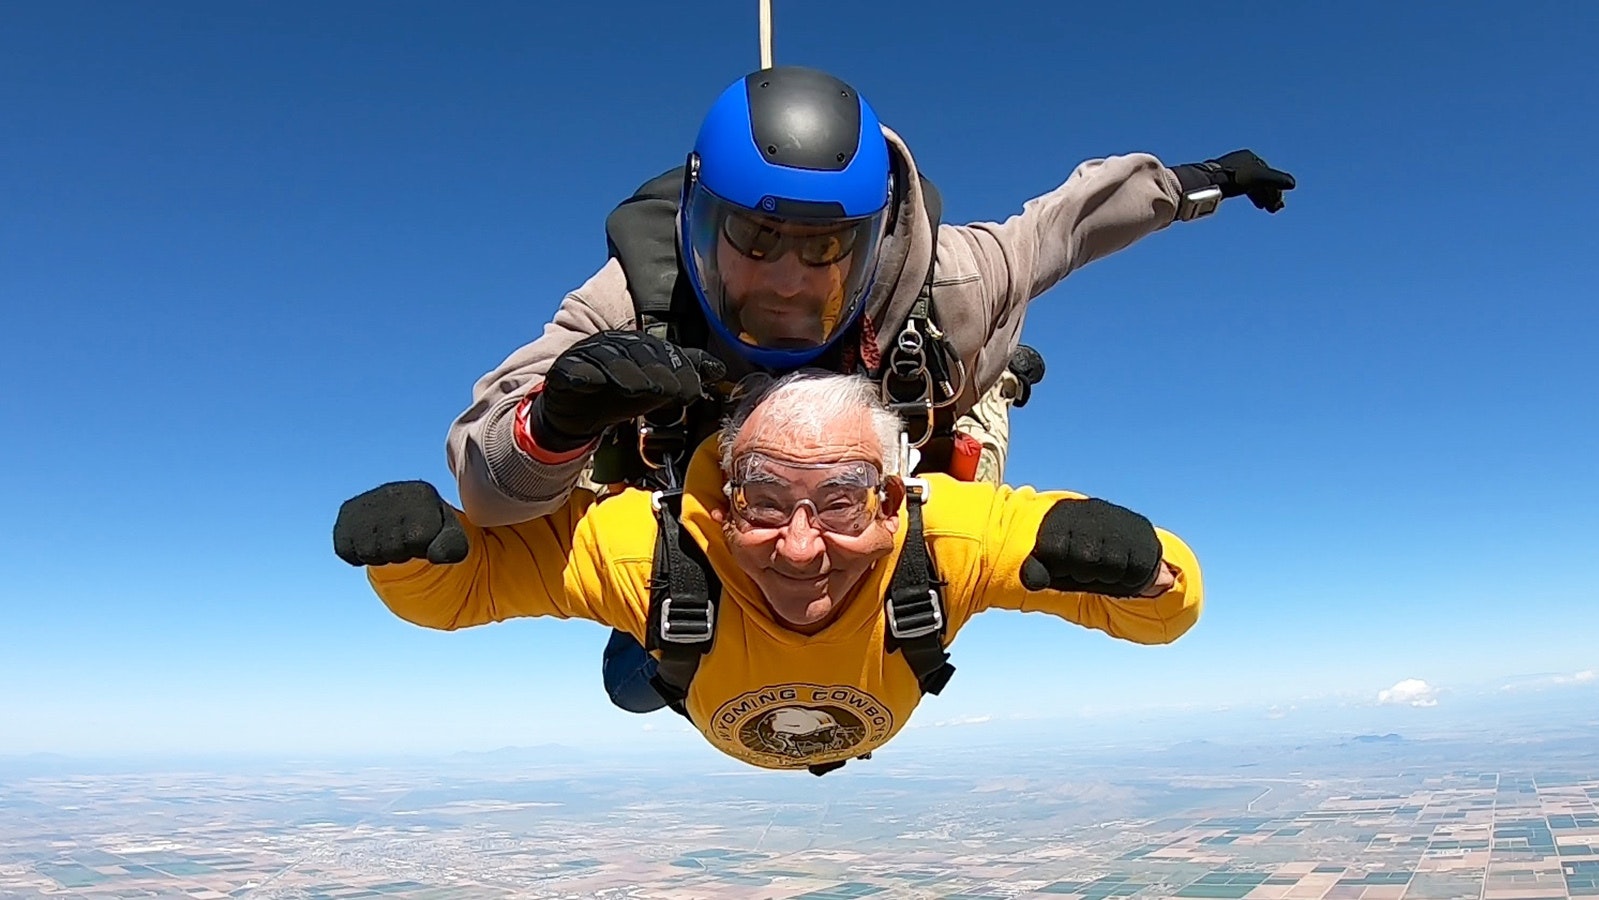 Ernie Herrera makes his first skydiving jump.